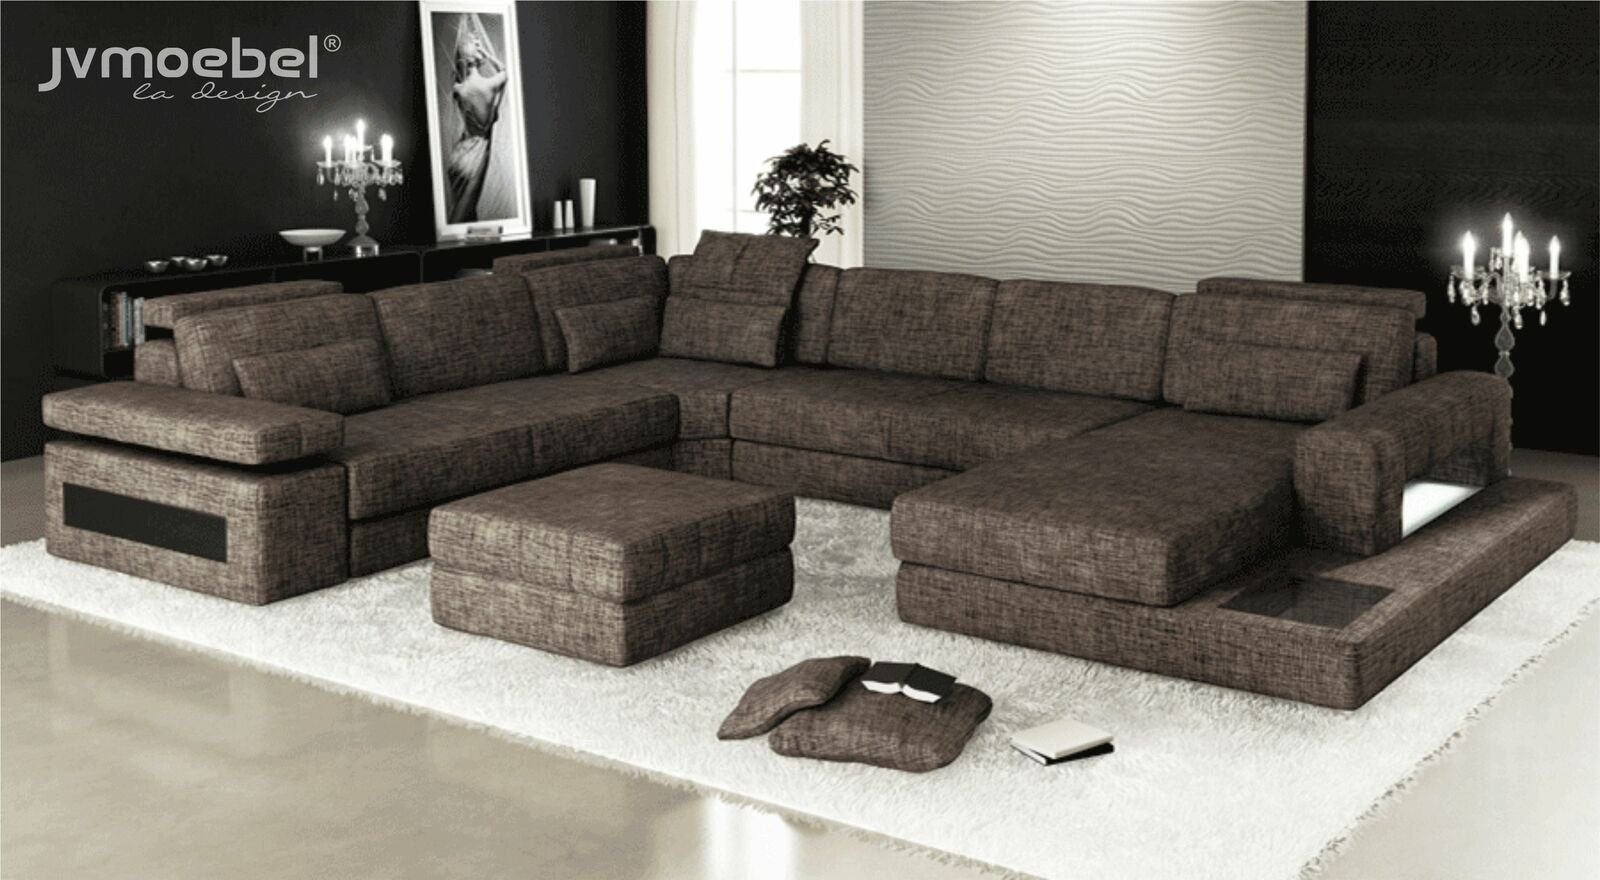 JVmoebel Ecksofa Ecksofa Stoff U-Form Couch Design Polster Textil Eck Wohnlandschaft, Made in Europe